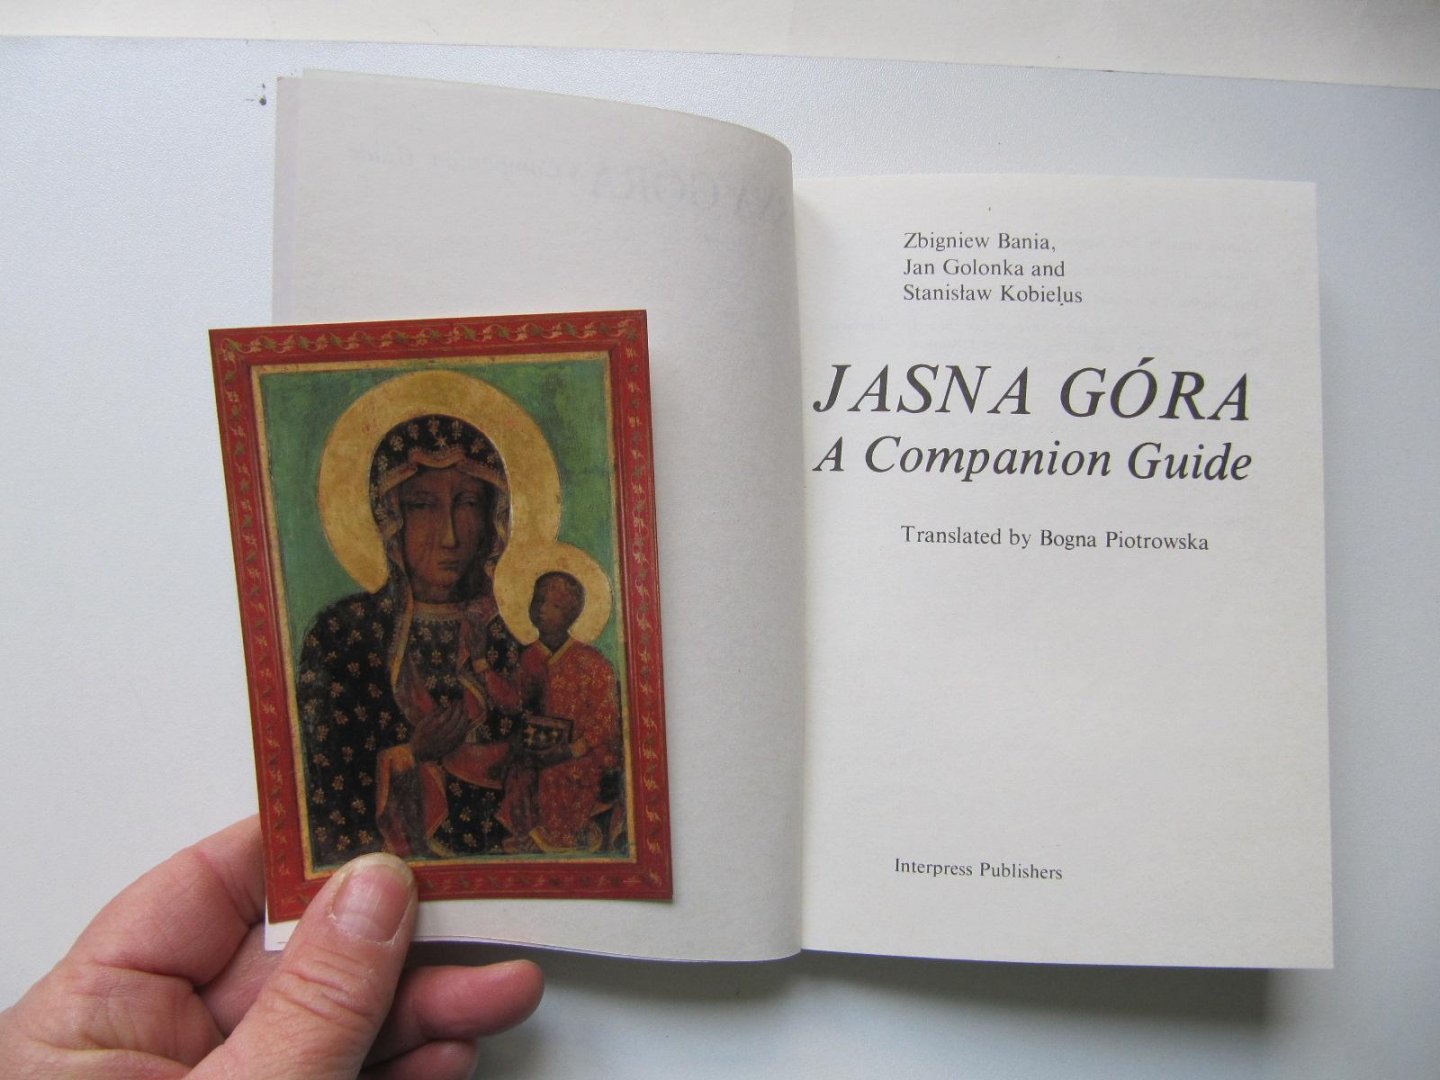 Z. Bania- J. Golonka - S. Kobielus - Jasna Gora - A Companion Guide